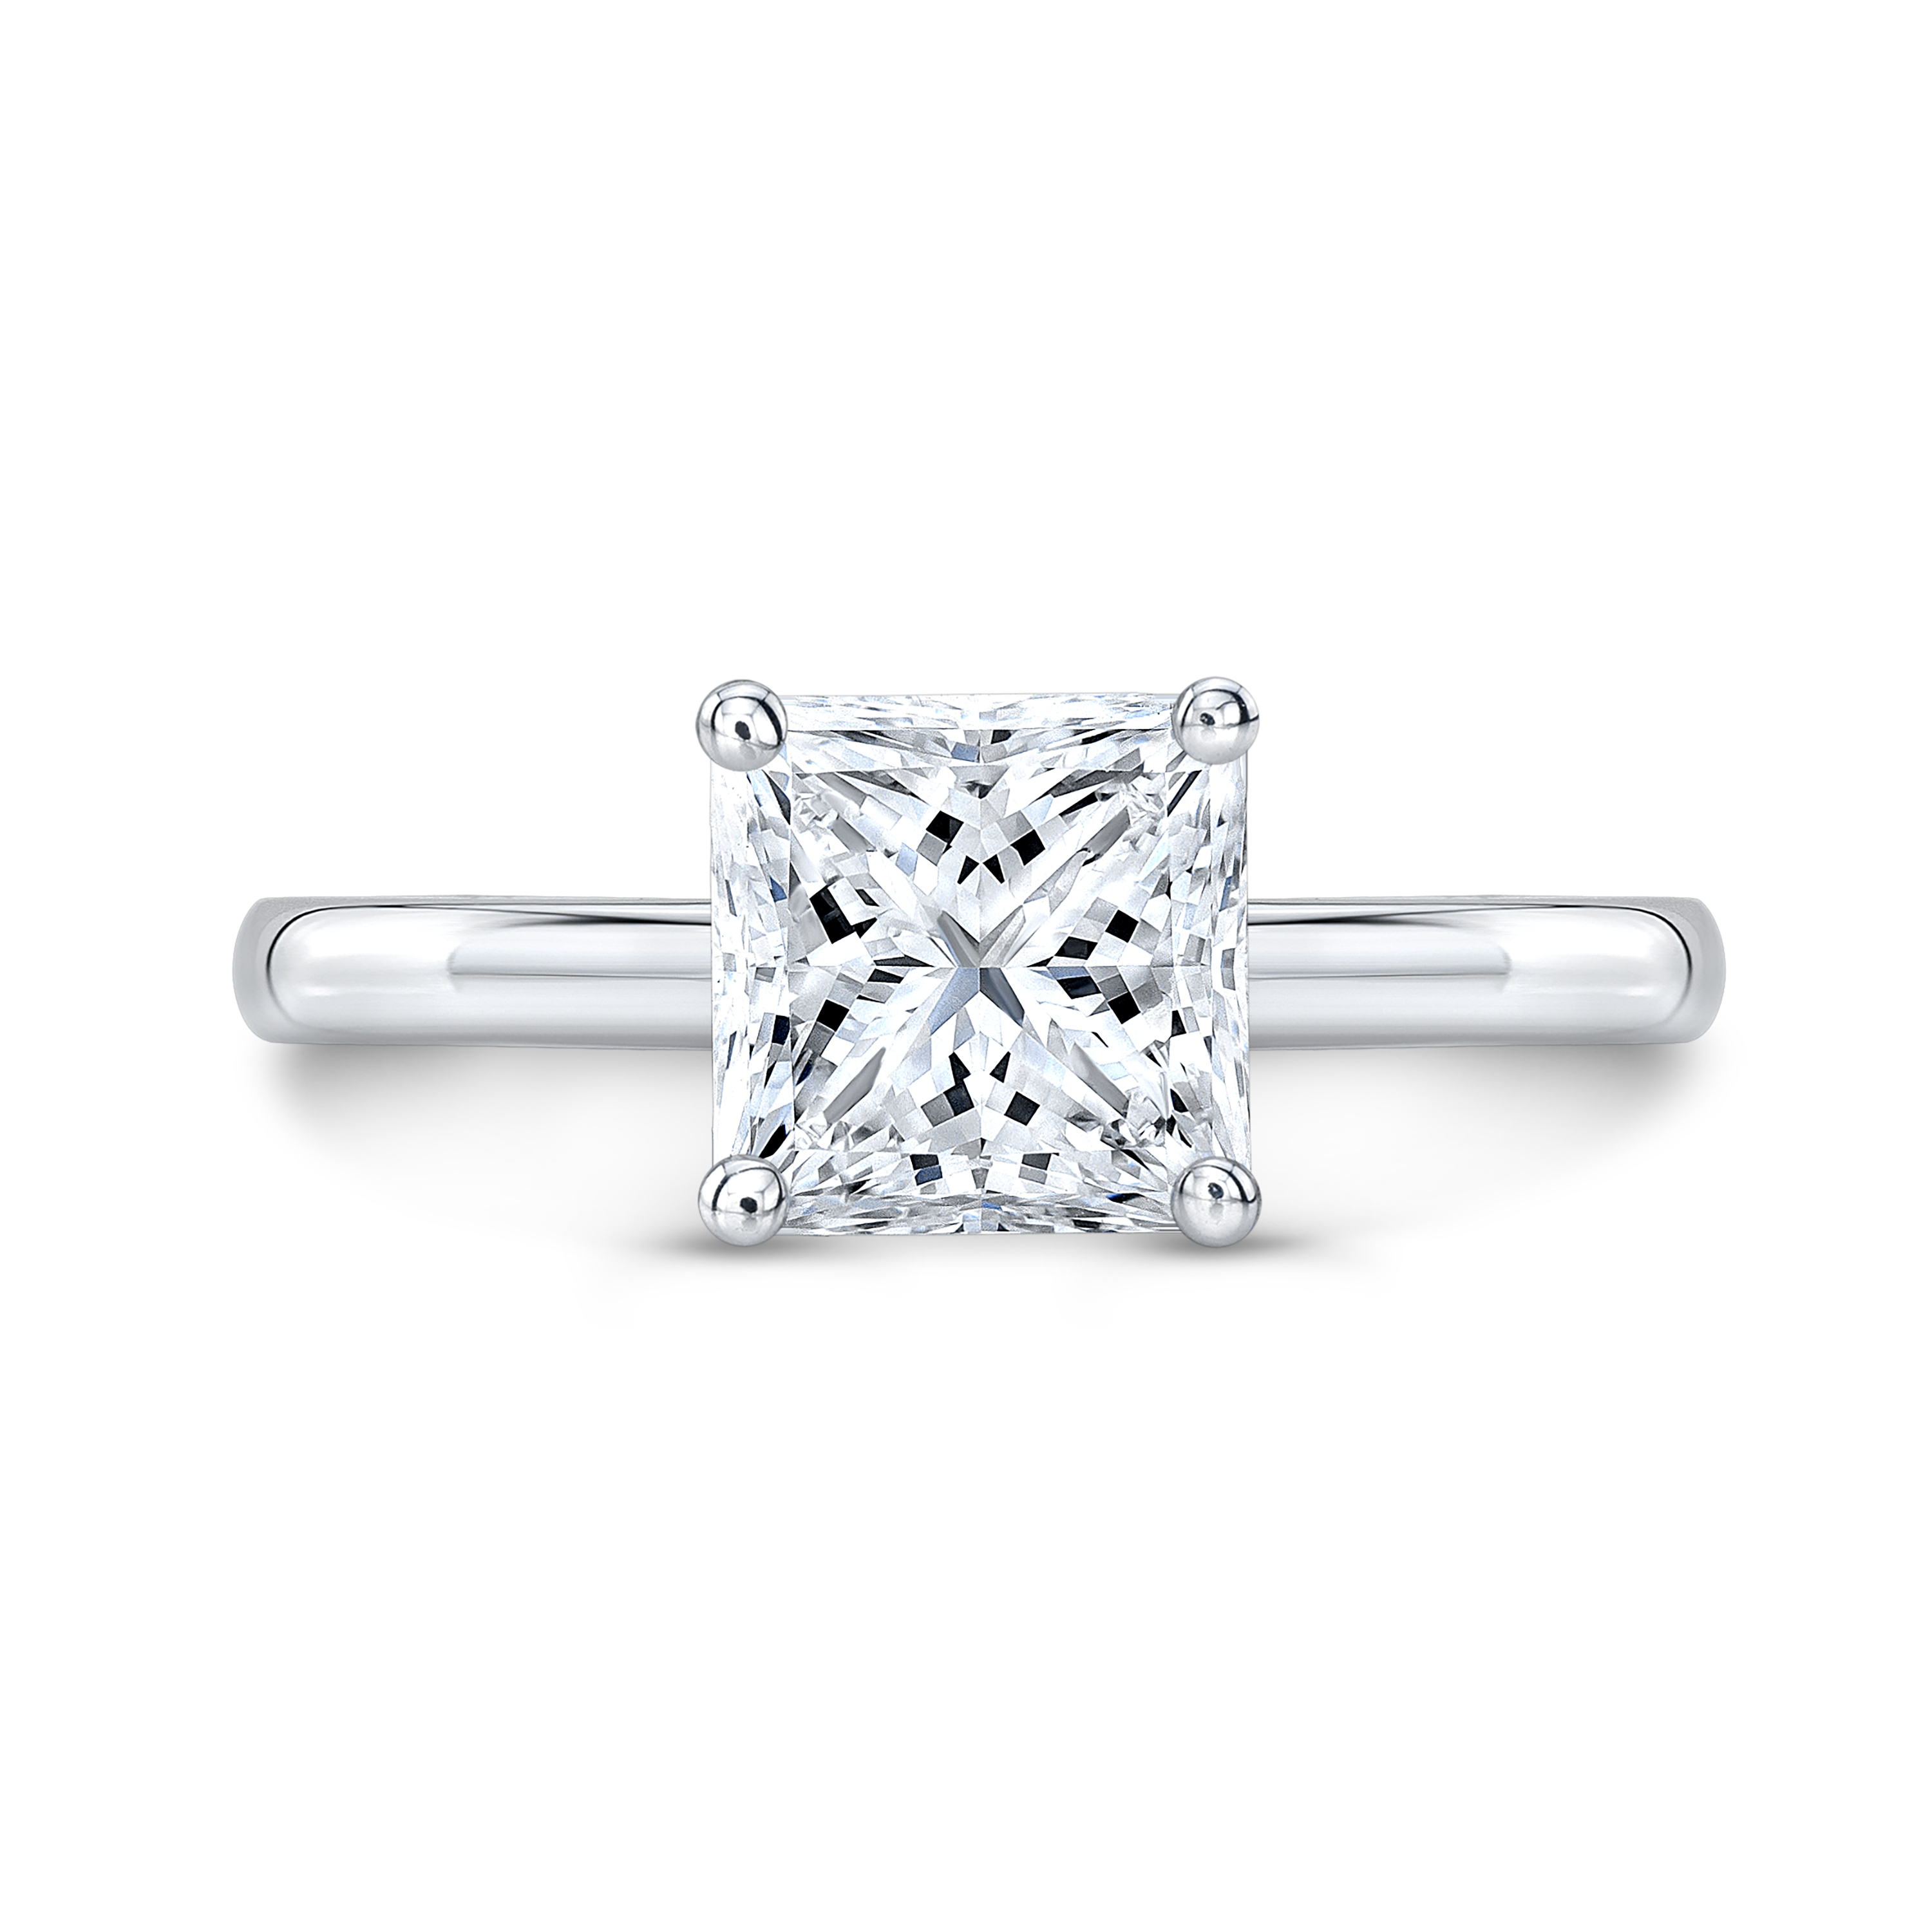 Princess cut diamond engagement ring - Thomas Meihofer Jewellery Design